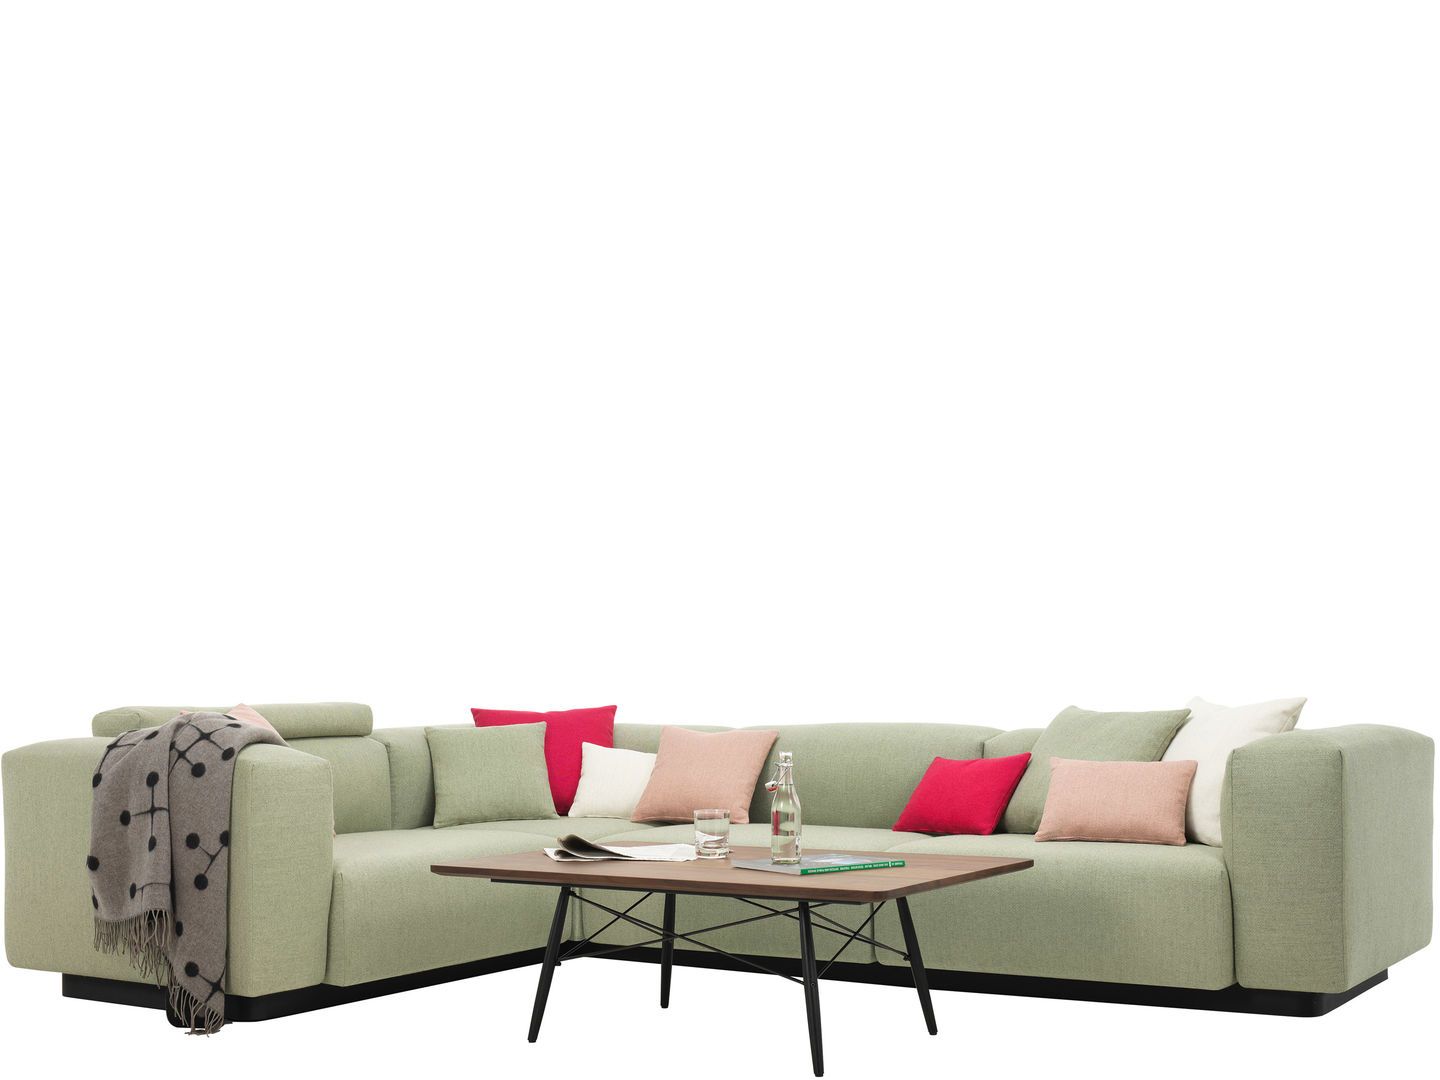 Vitra Soft Modular Sofa Three-seater, corner element from One52 Furniture website